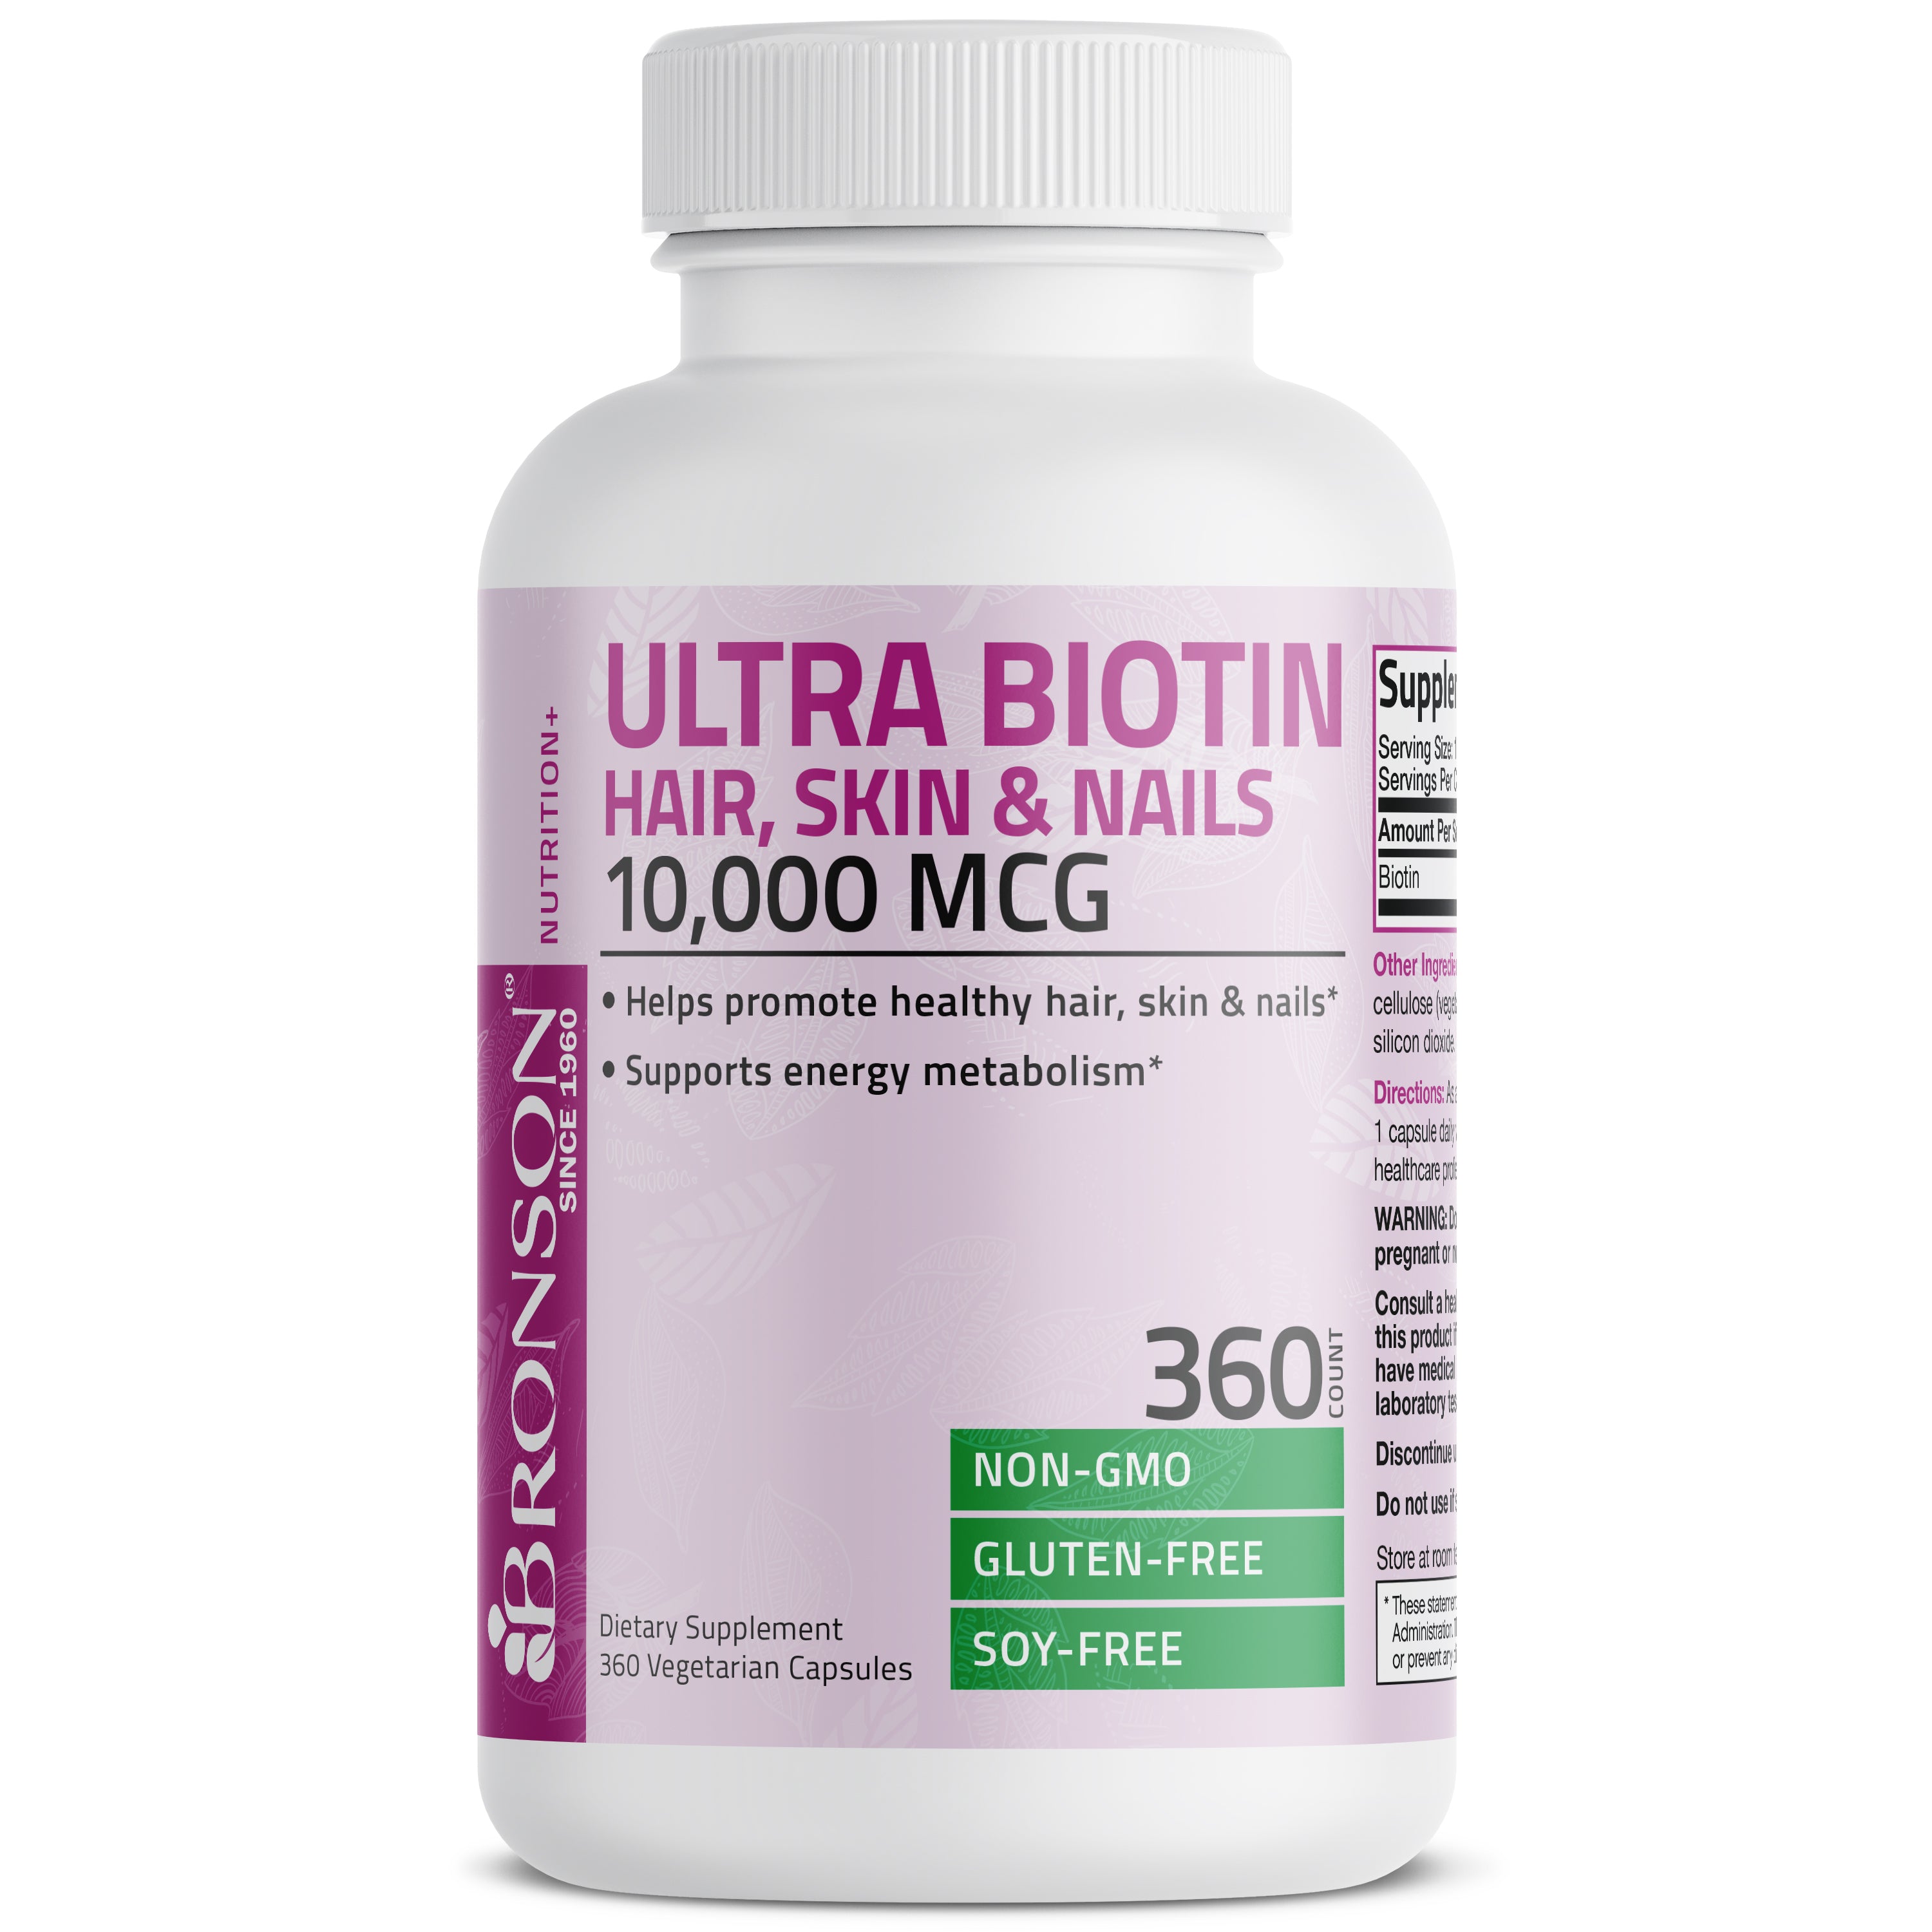 Ultra Biotin Hair, Skin & Nails - 10,000 mcg view 11 of 14